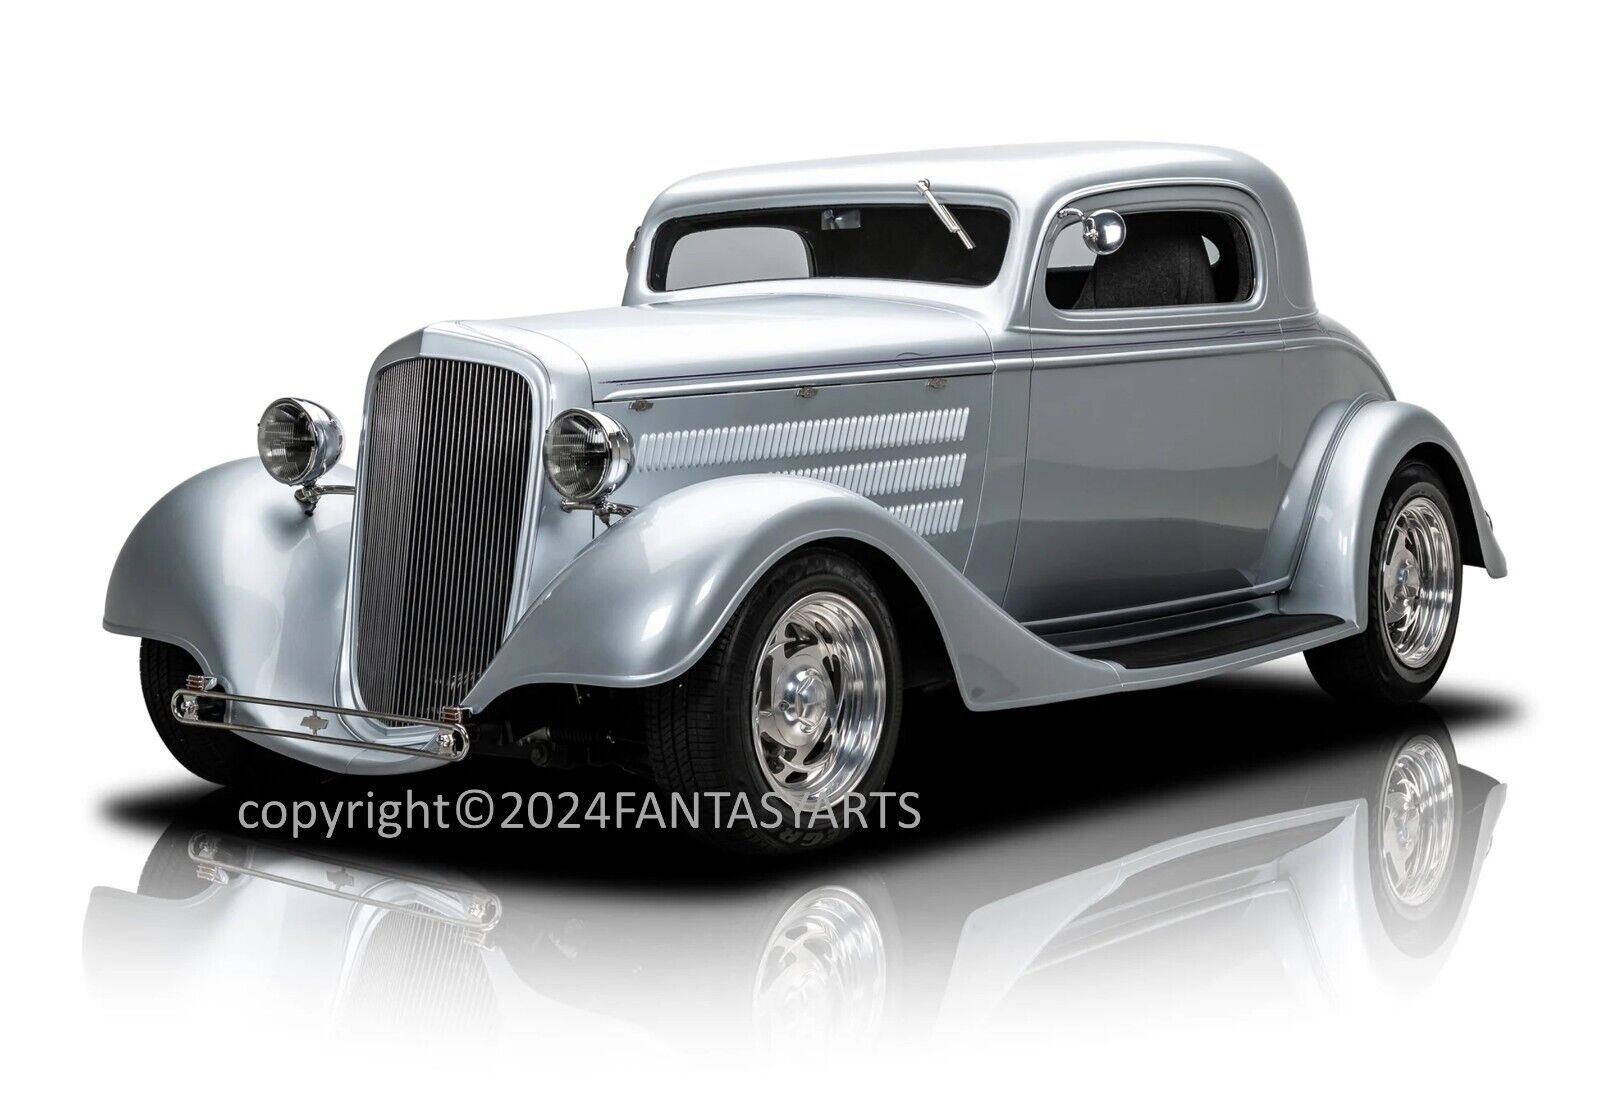 1934 Chevrolet 3-Window Coupe Premium Quality Gloss Photo Print 8\